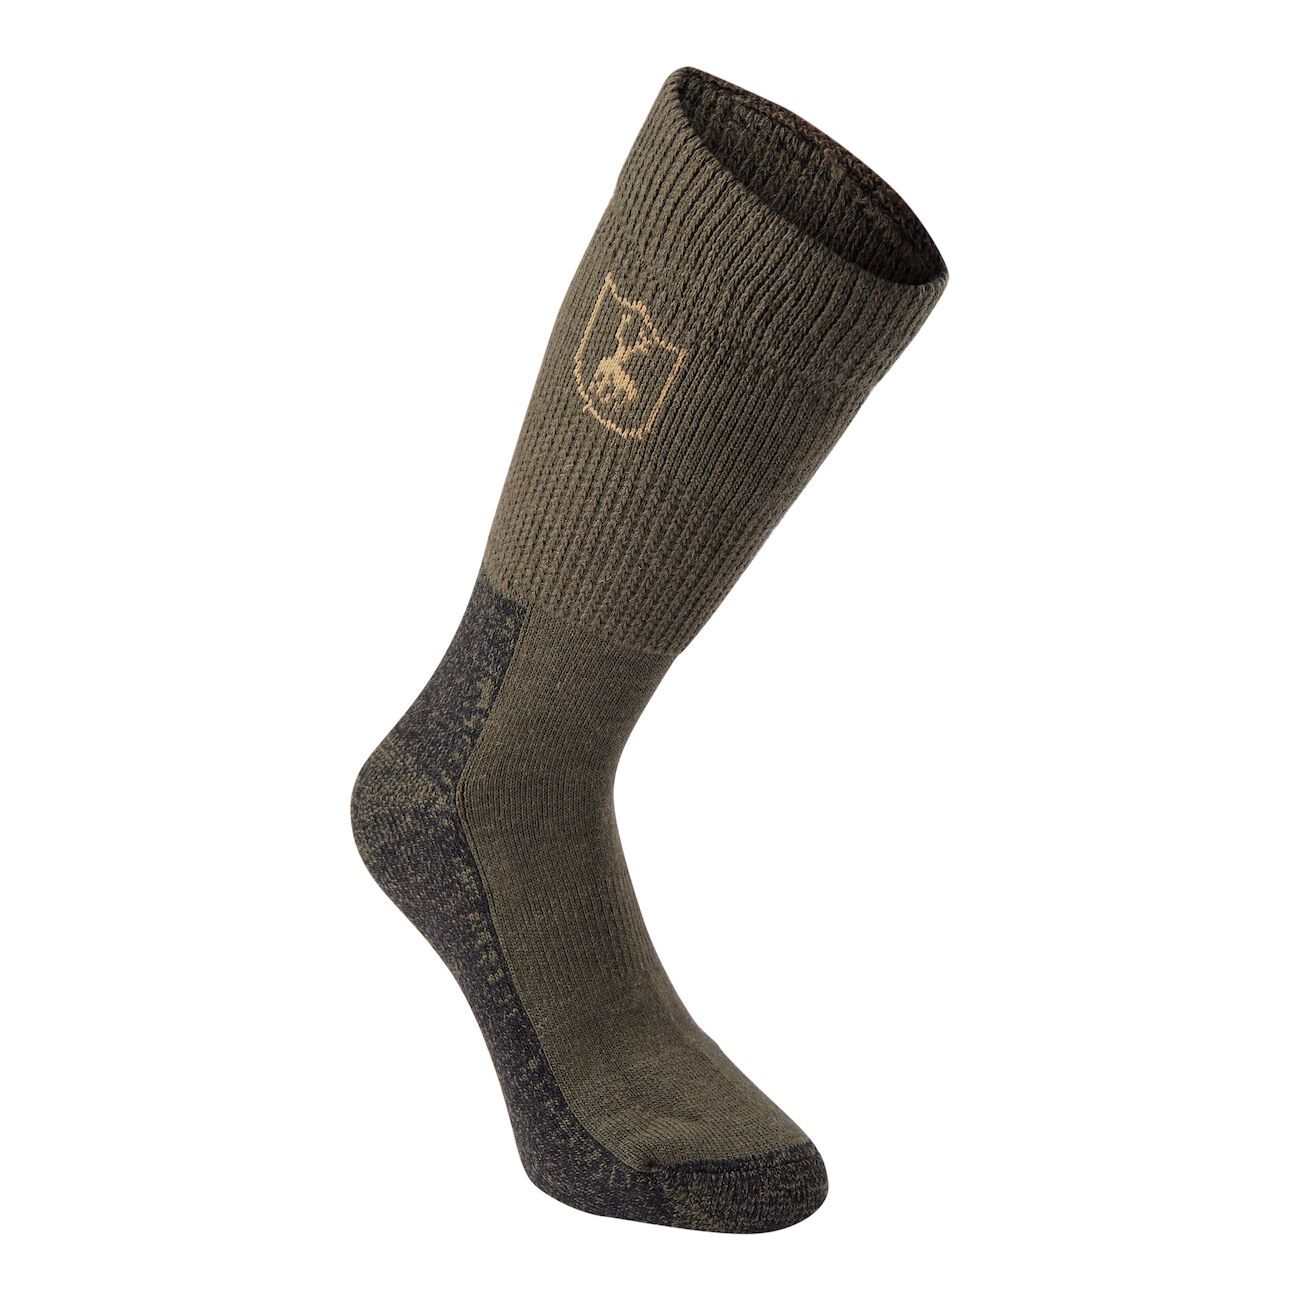 Lovačke čarape - Wool Socks Deluxe kratke, vel.40/43,boja 360[8425]